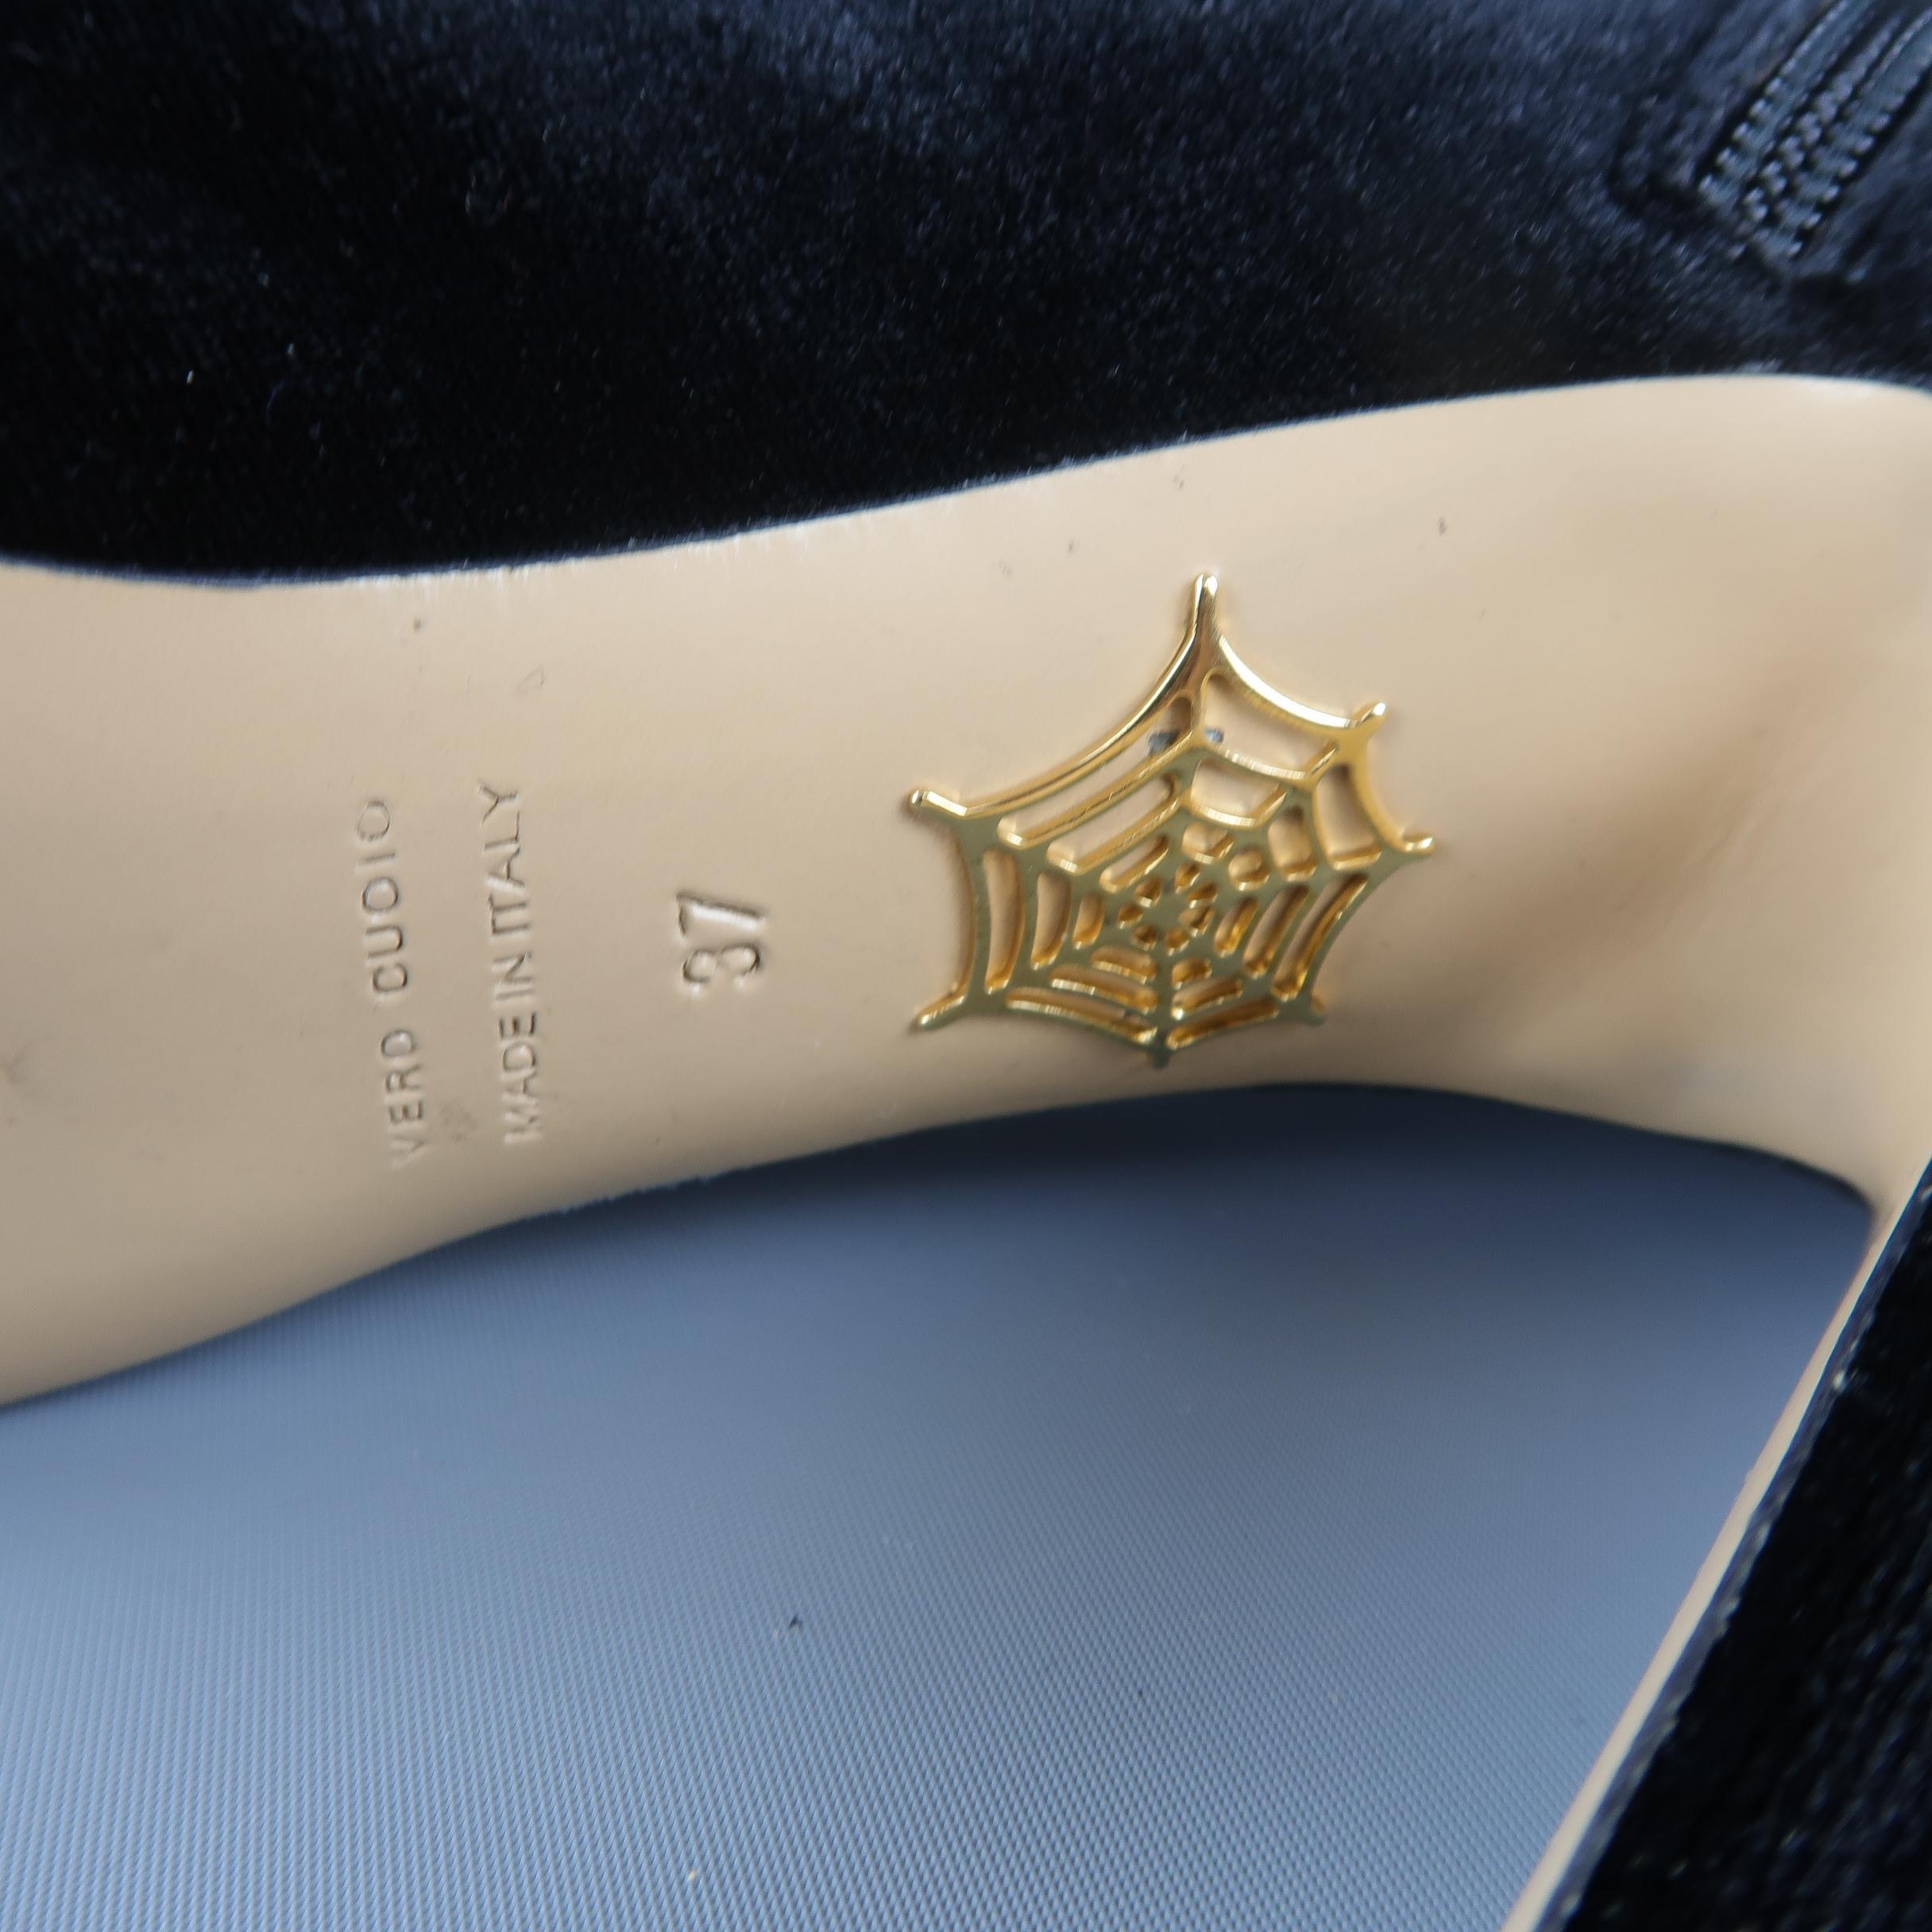 CHARLOTTE OLYMPIA Boots - Size US 7 - Black Velvet Over The Knee Heels 4